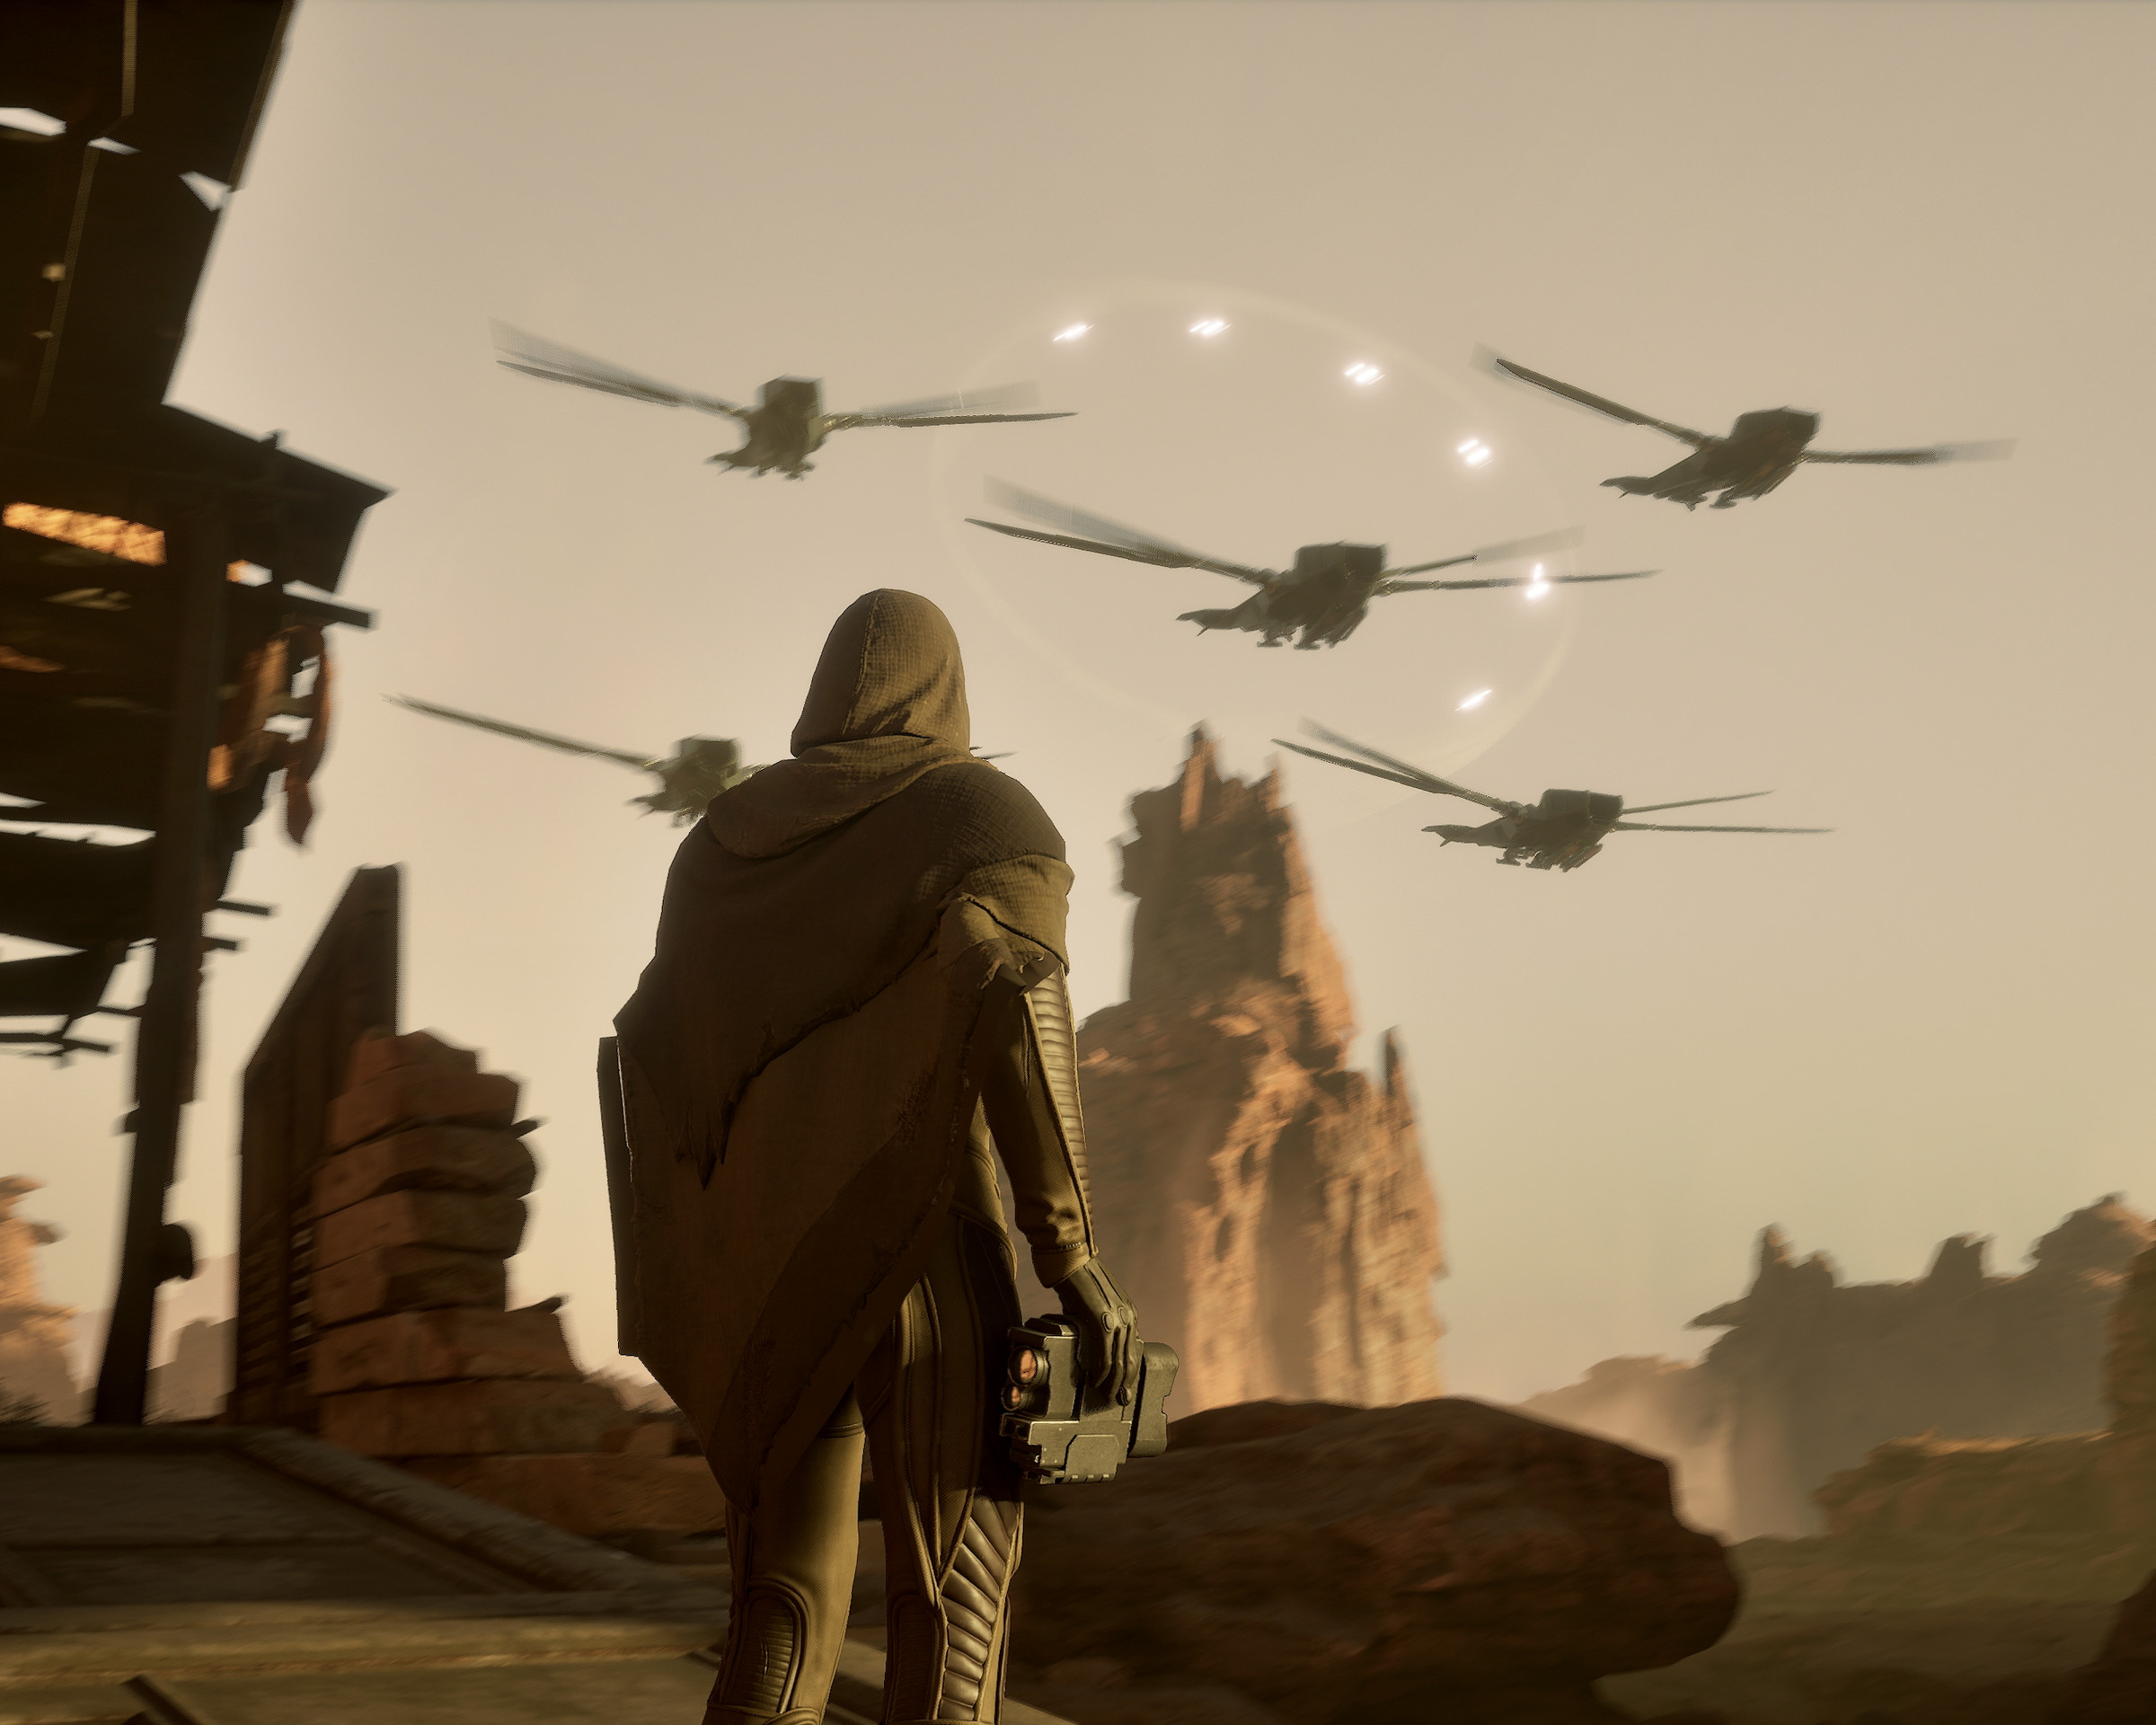 A screenshot from the video game Dune: Awakening.